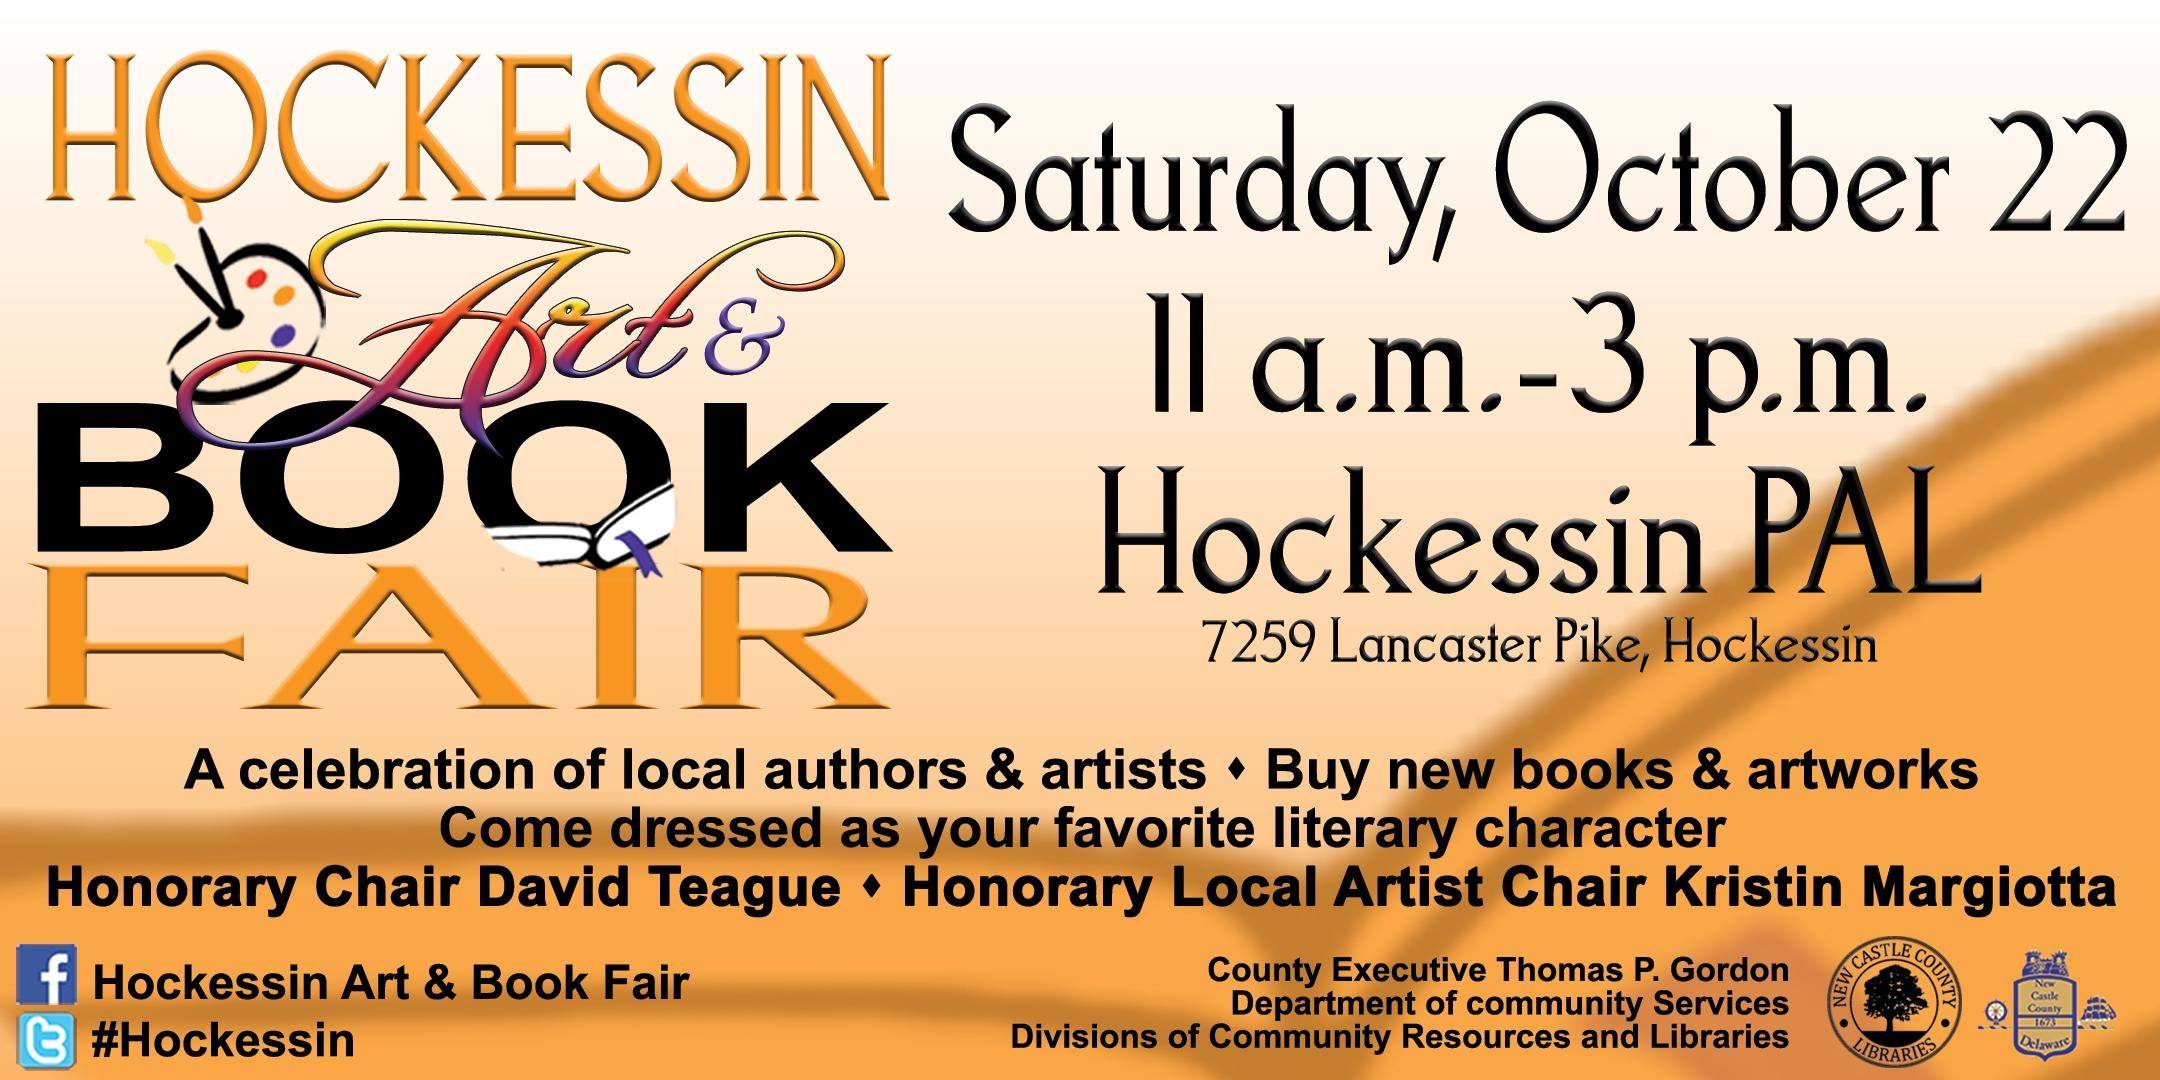 Hockessin Art & Book Fair October 22 Cat and Mouse Press